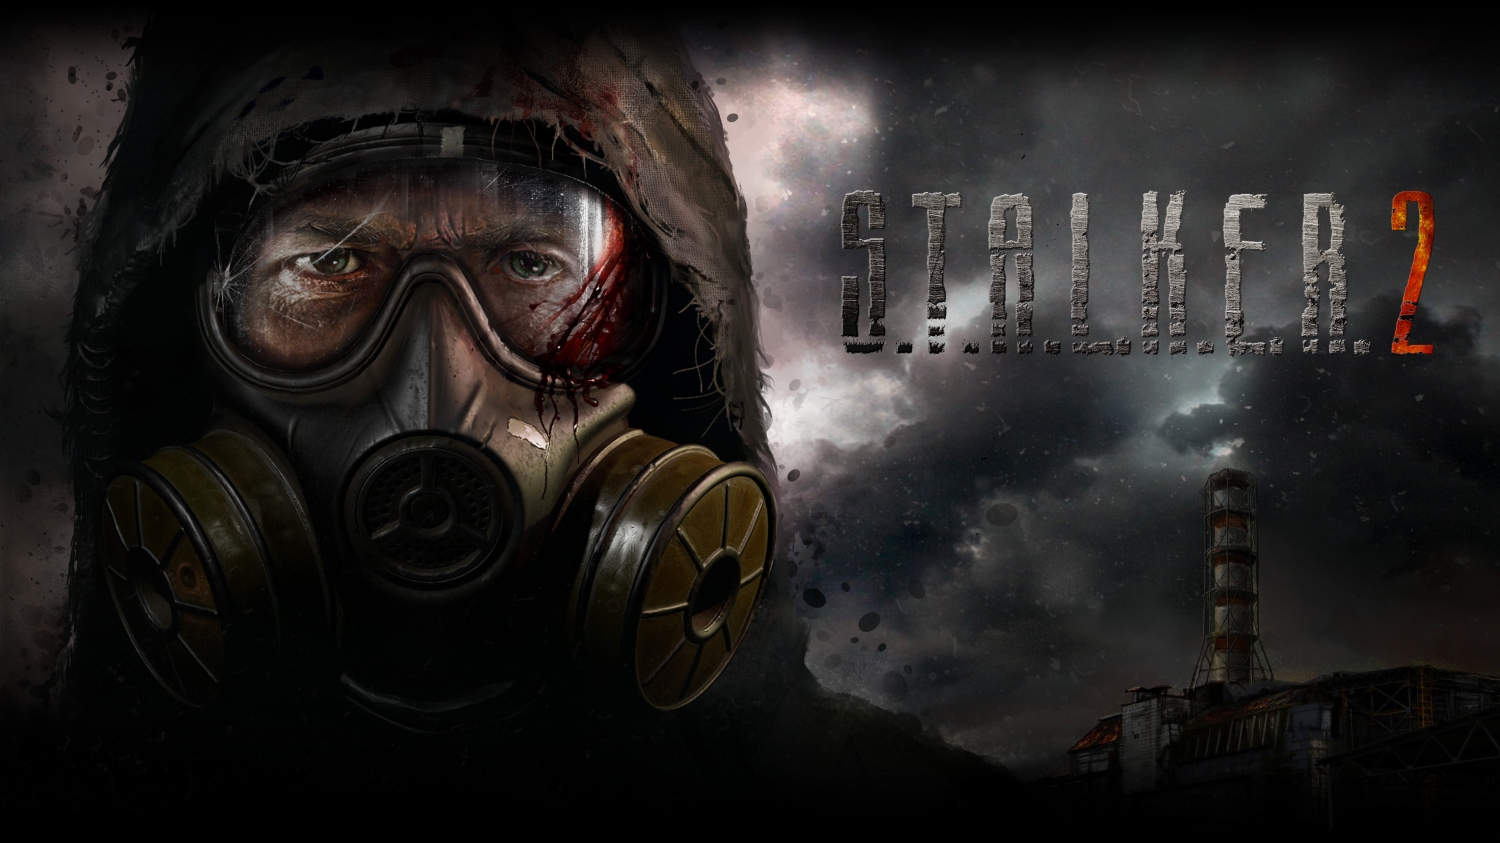 STALKER 2: Heart of Chornobyl - Official Trailer